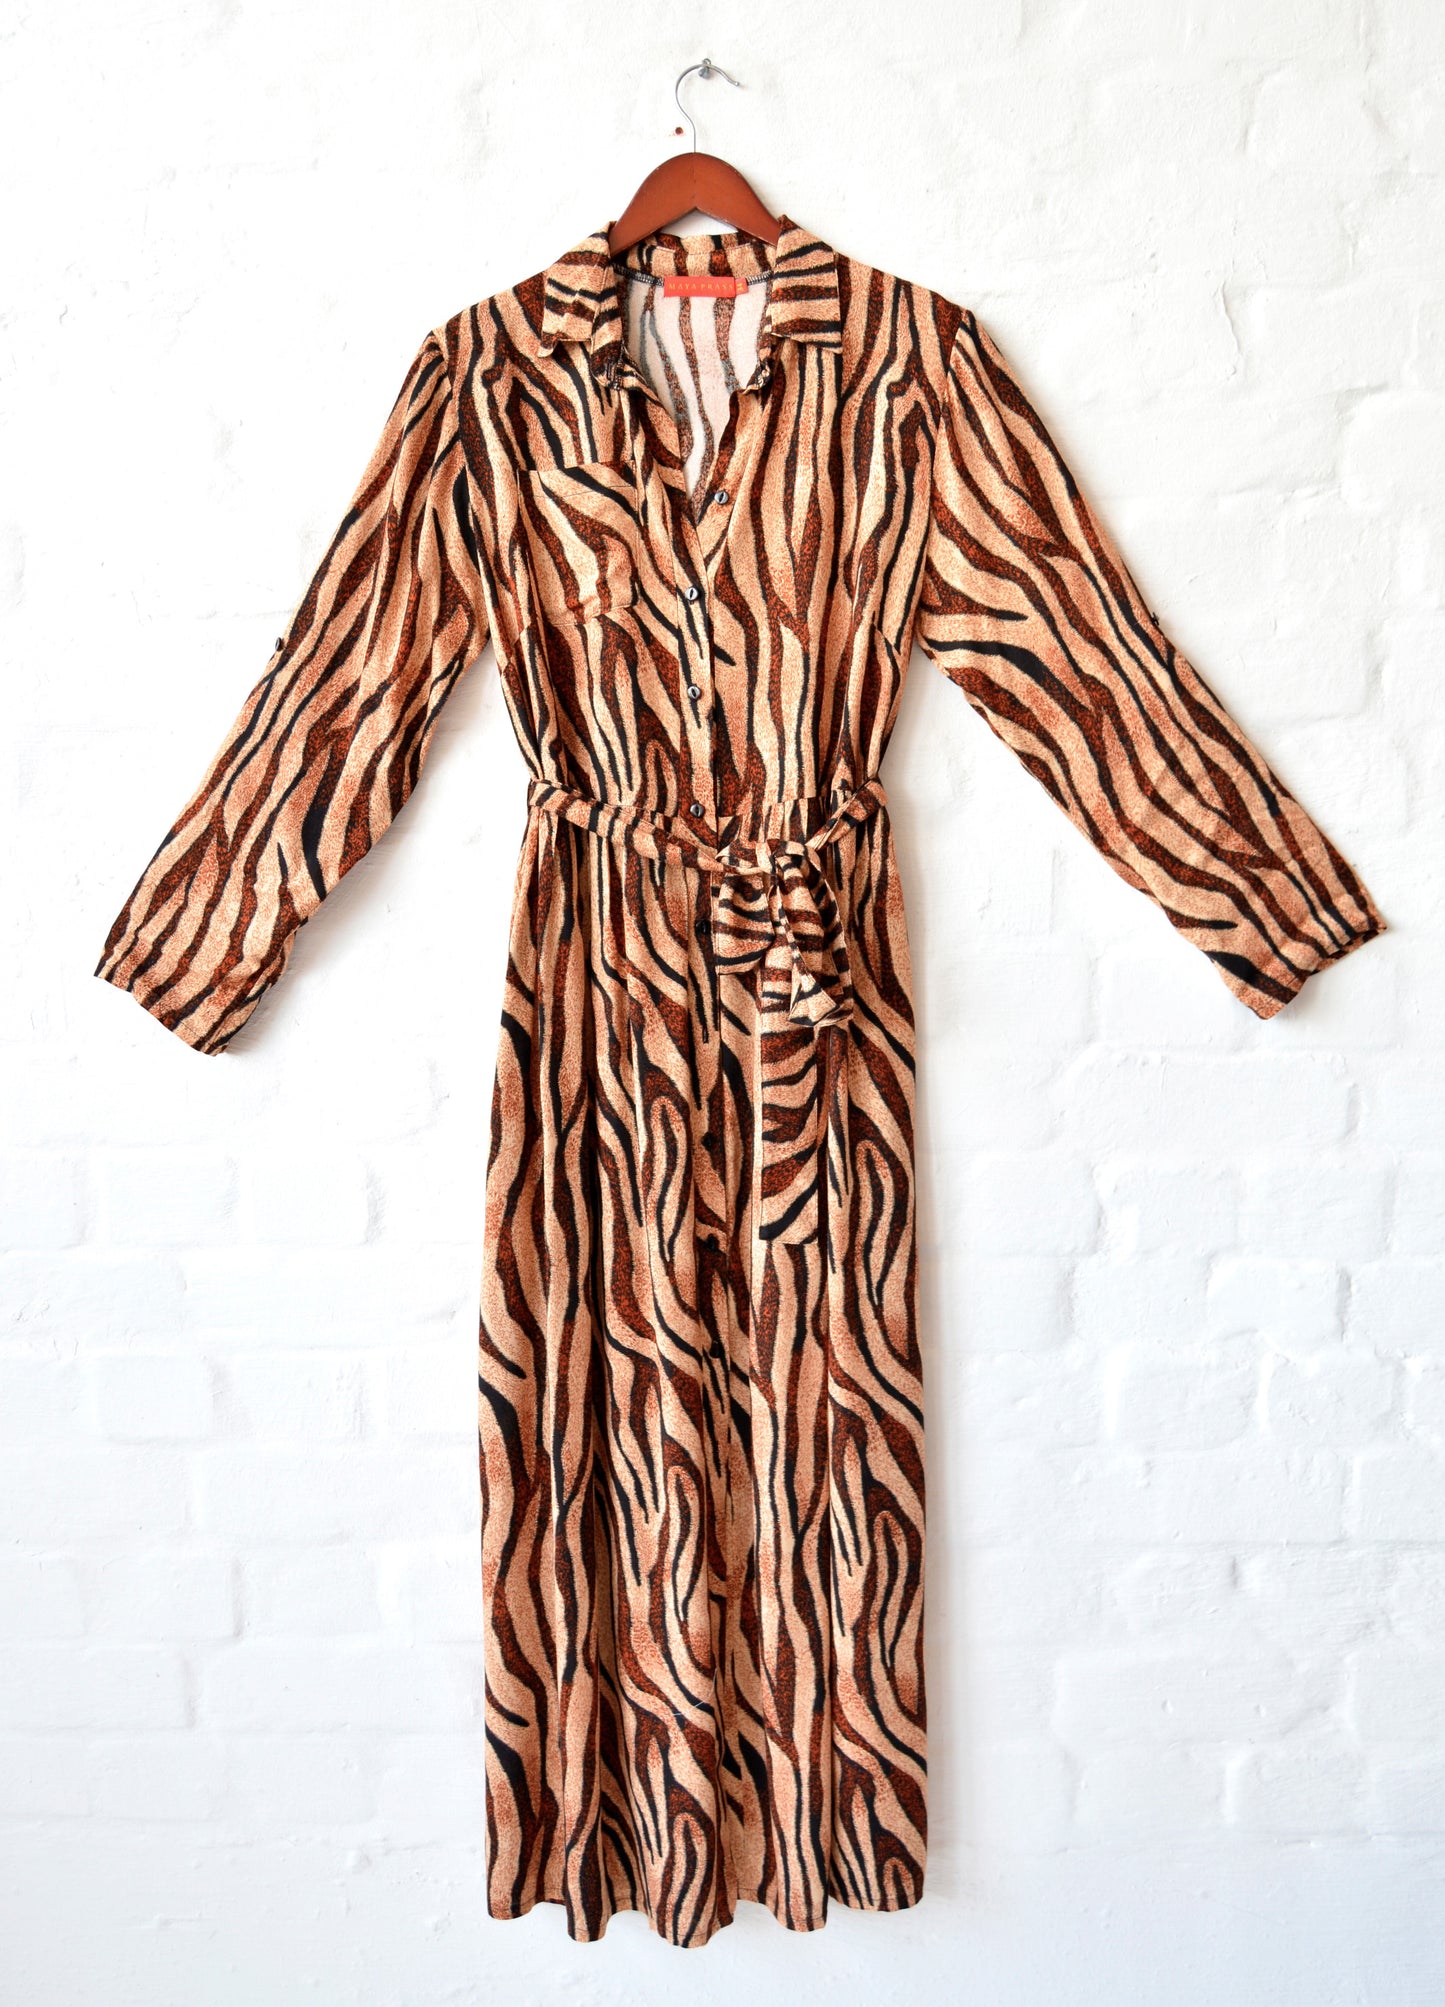 Ivy Shirt Dress in caramel Tiger Wave print size 32- 40